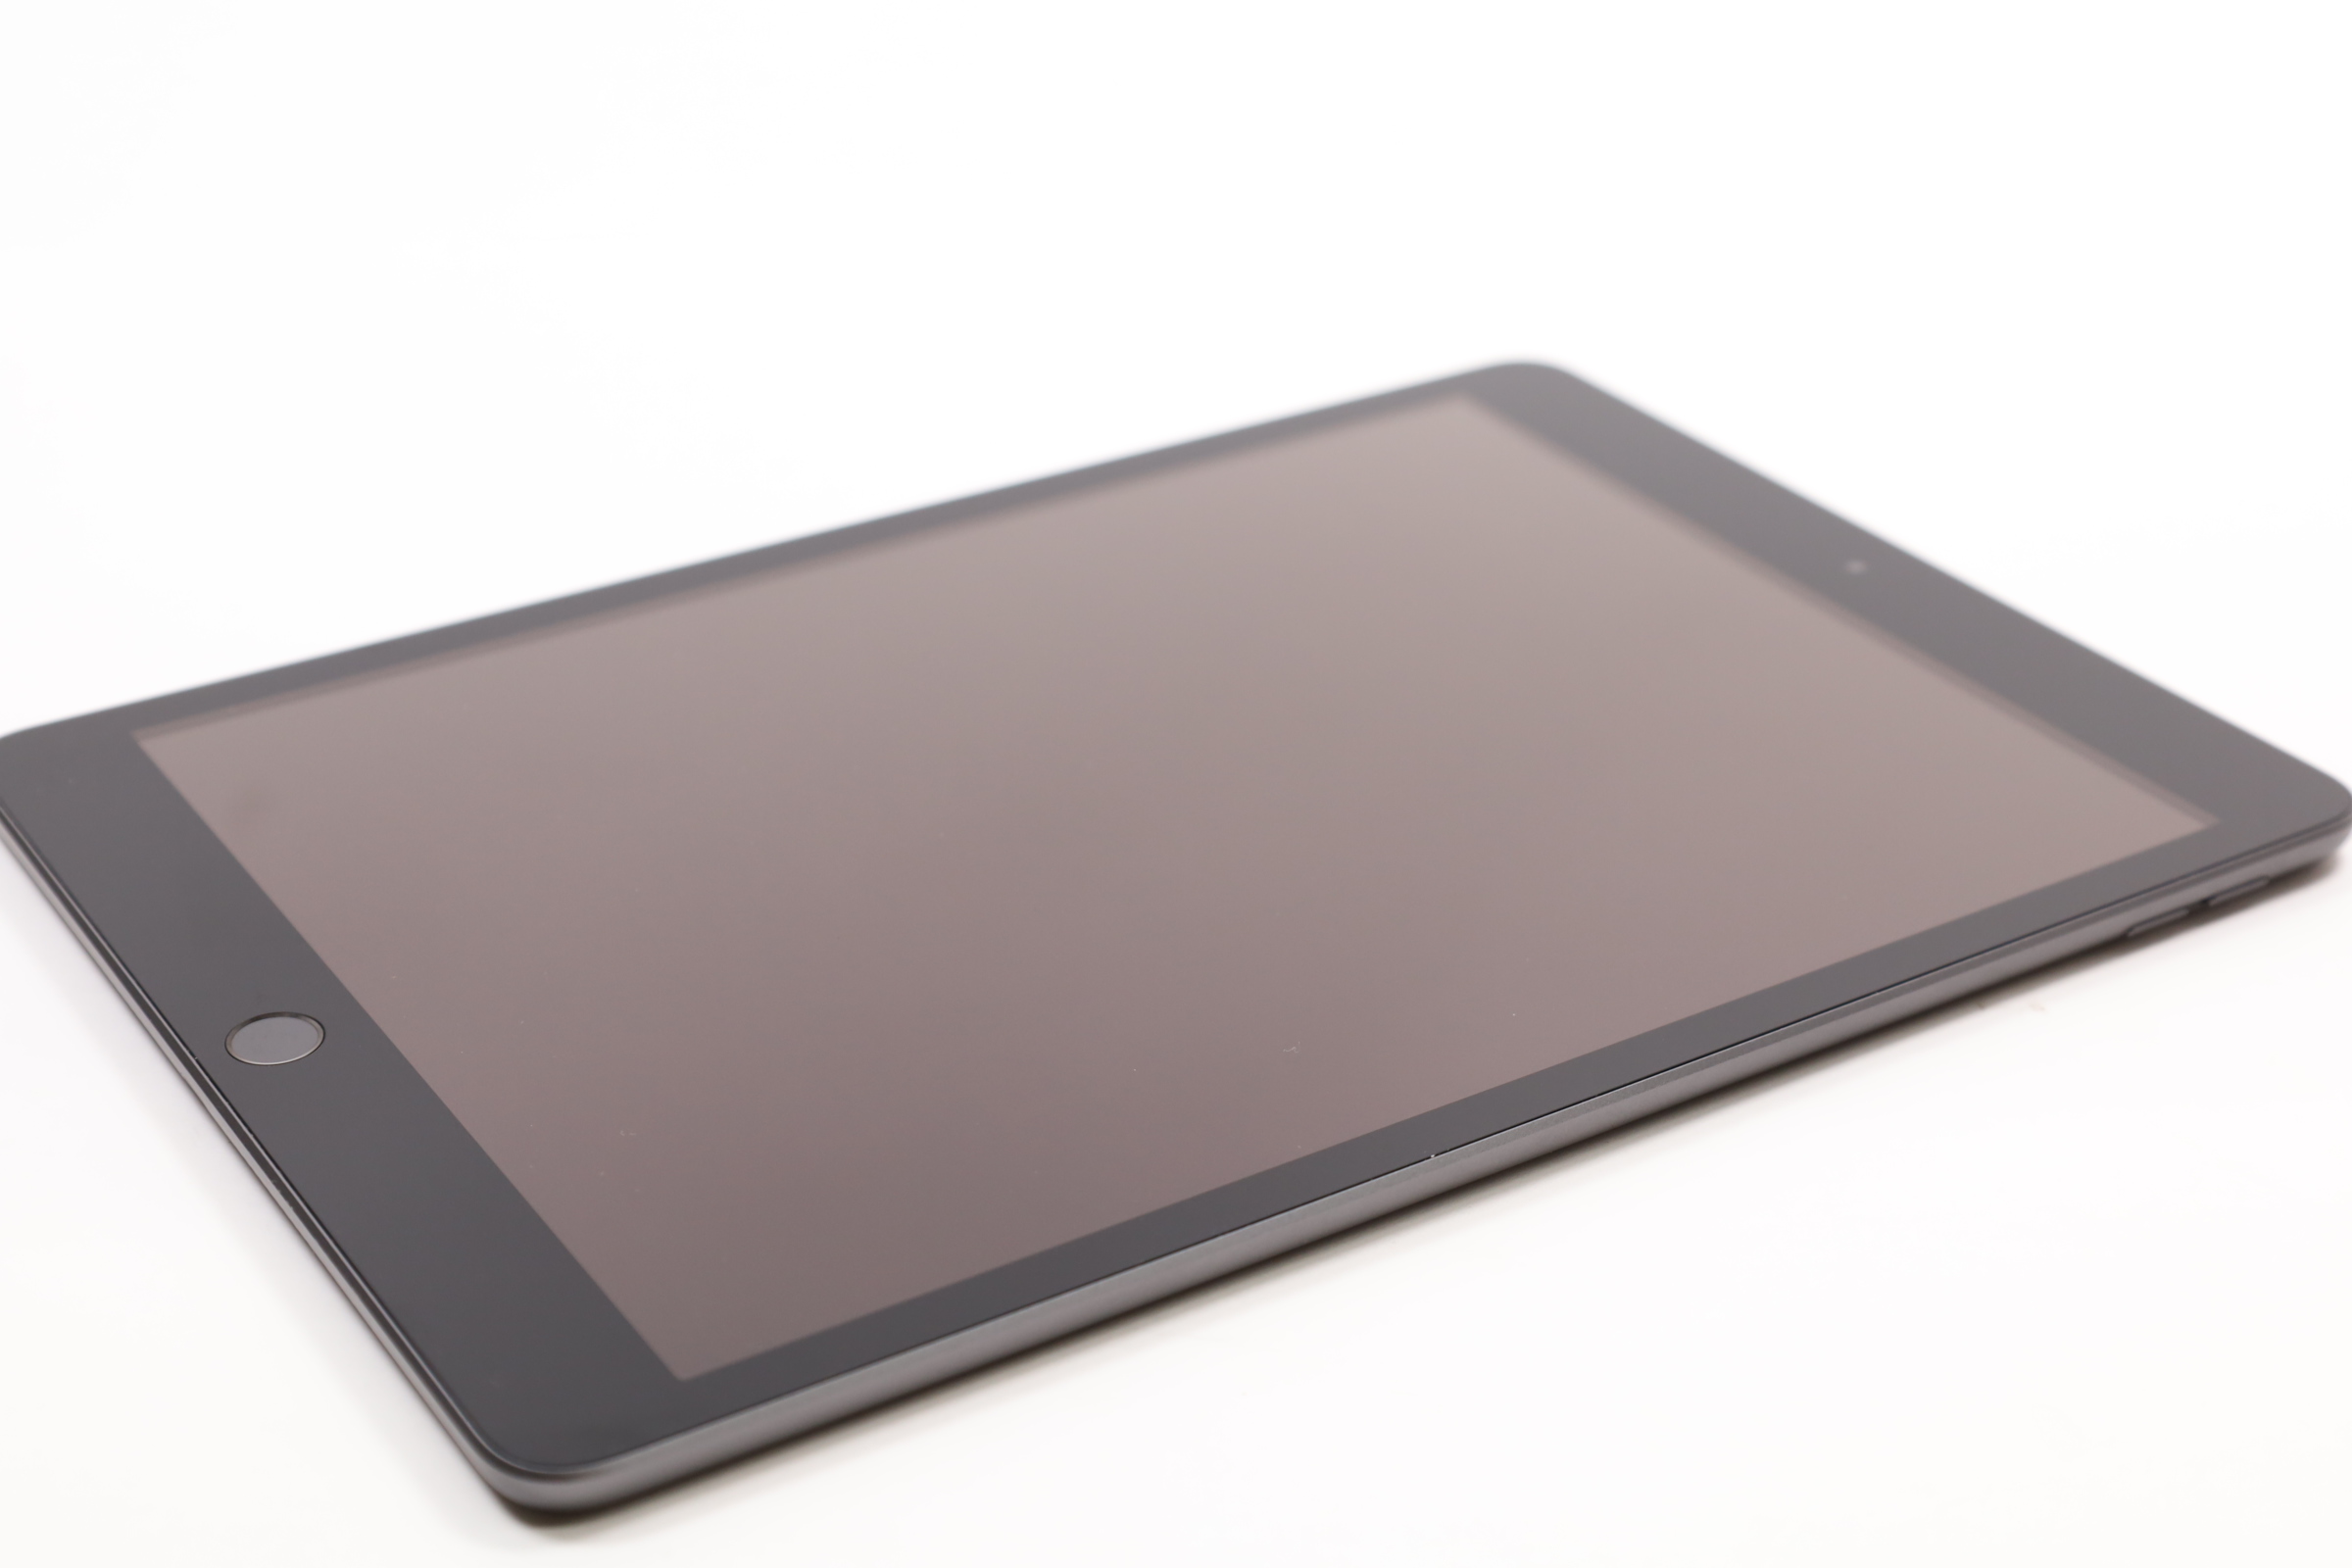 Apple iPad 8th Gen MYLD2LL/A 128GB Wi-Fi 10.2 Tablet - Space Gray